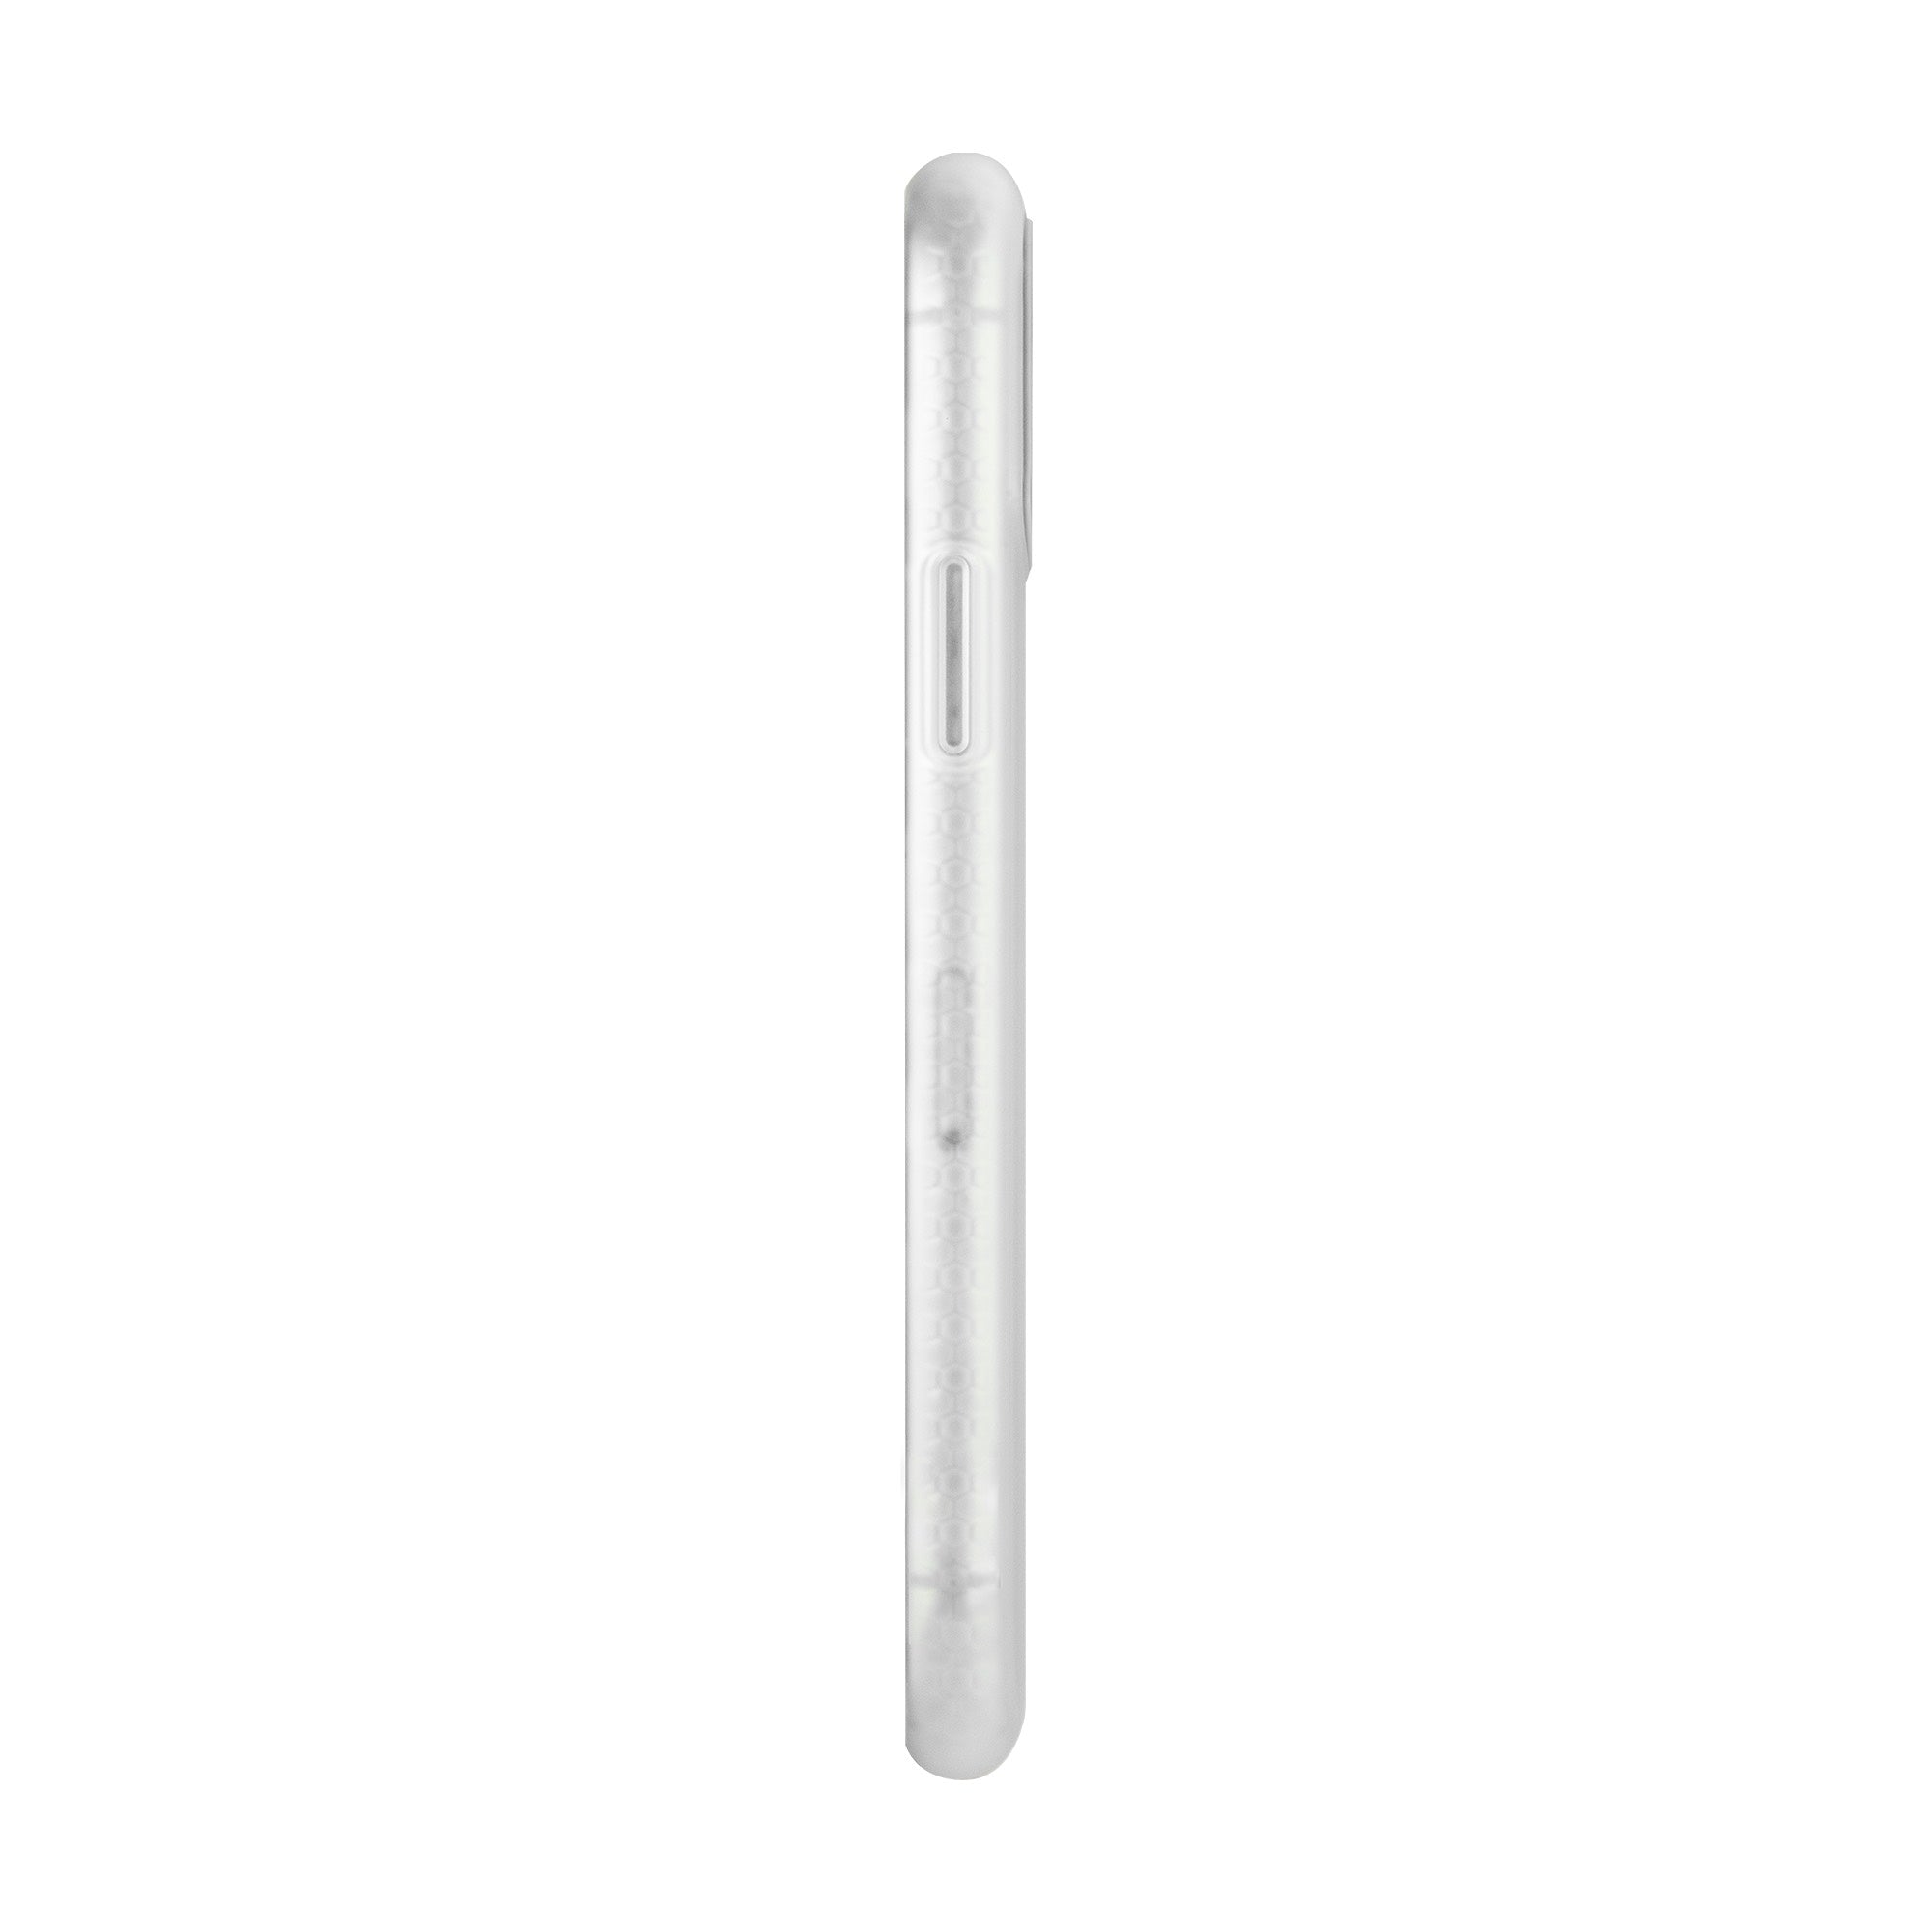 Aero iPhone 11 Pro - White